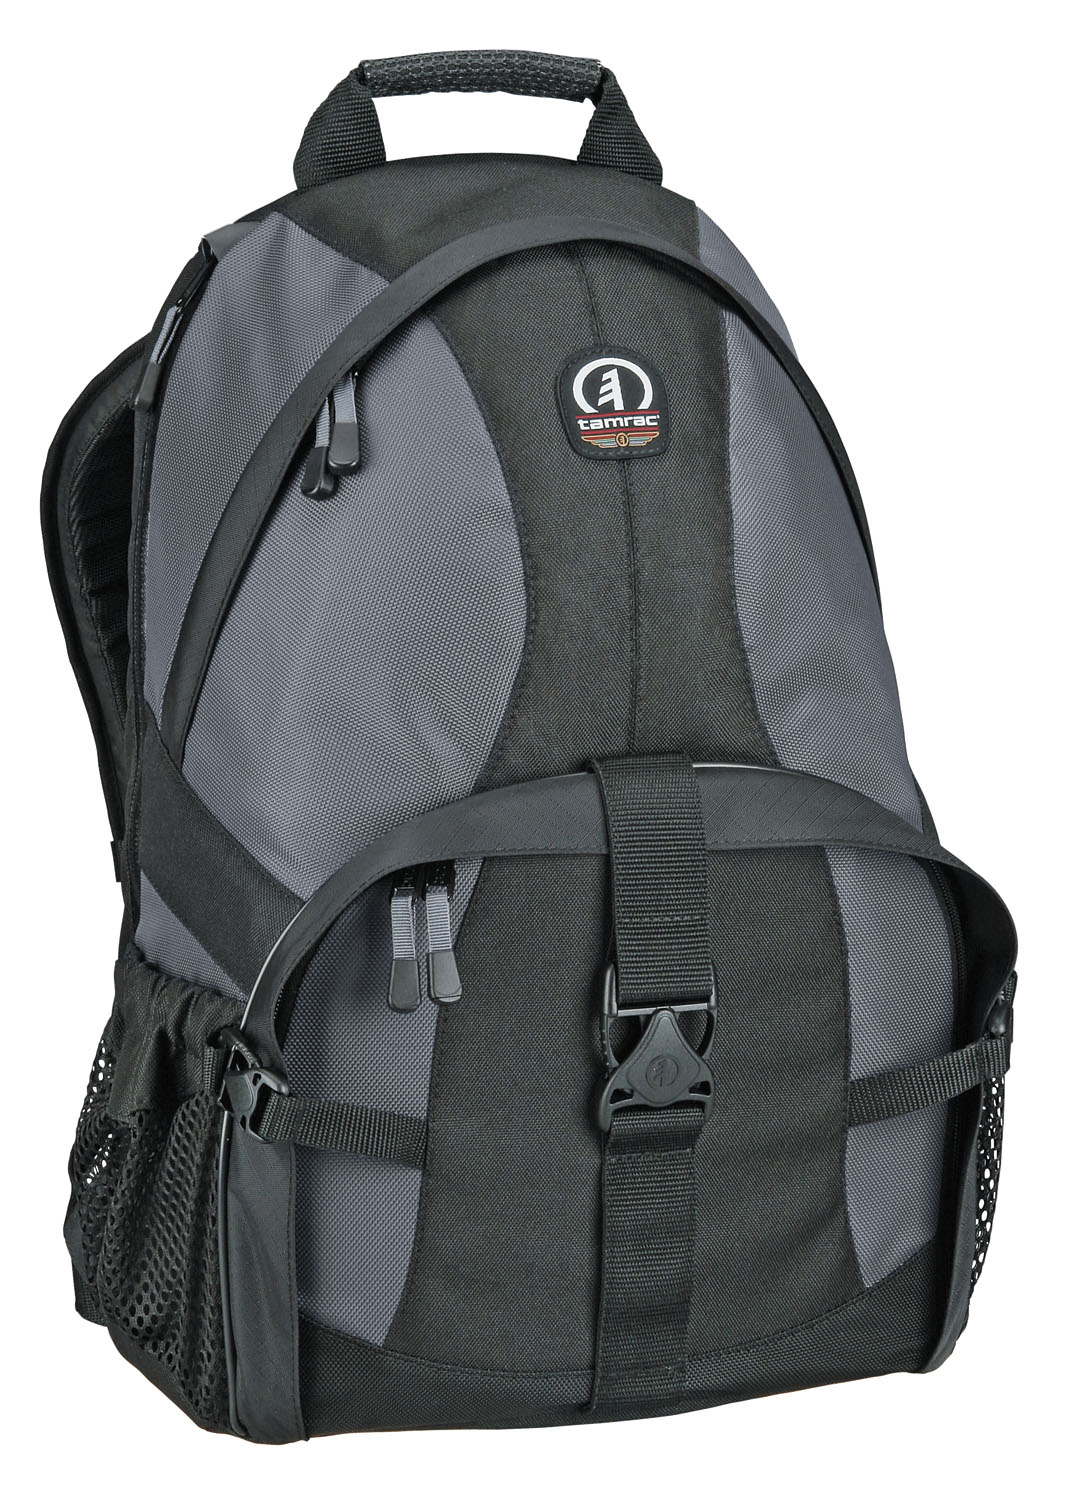 Tamrac 5549 ADVENTURE 9 Backpack